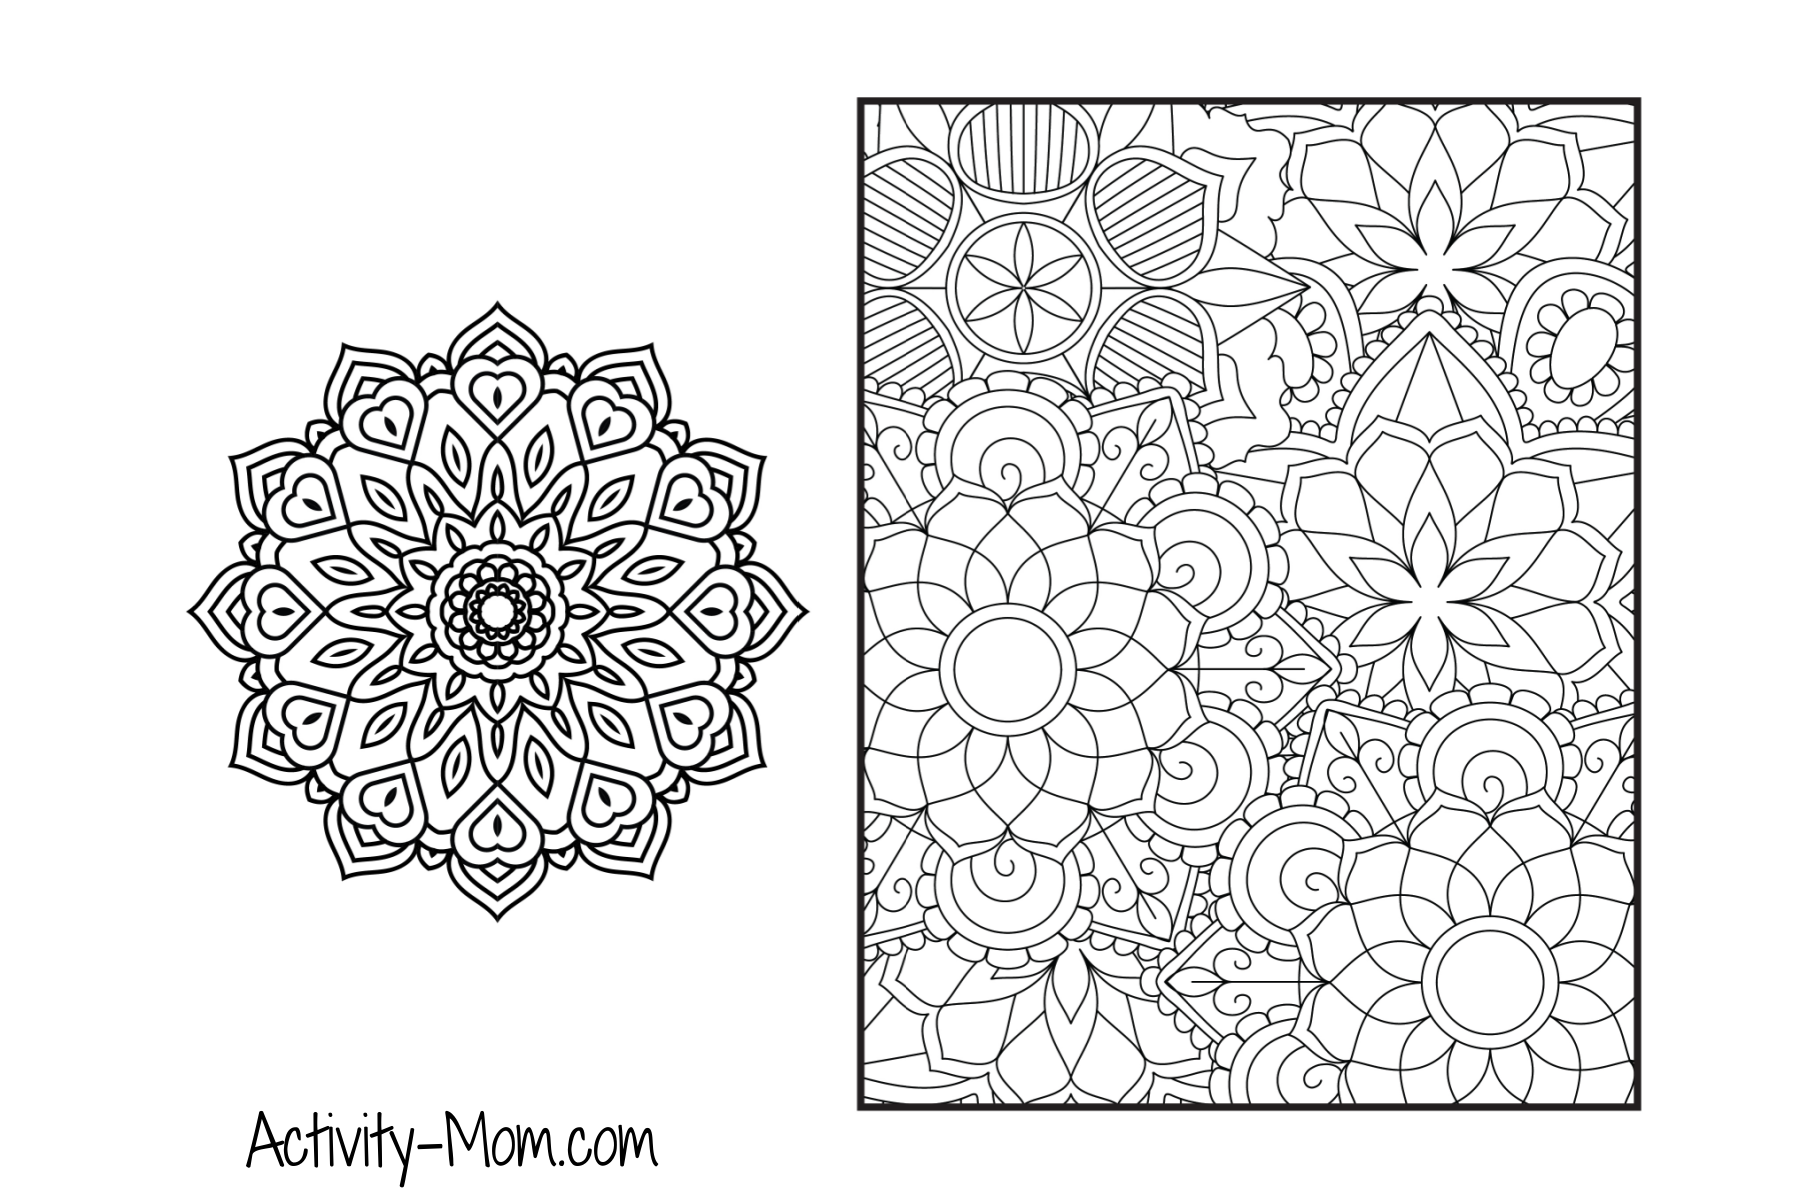 Mandala coloring pages free printable